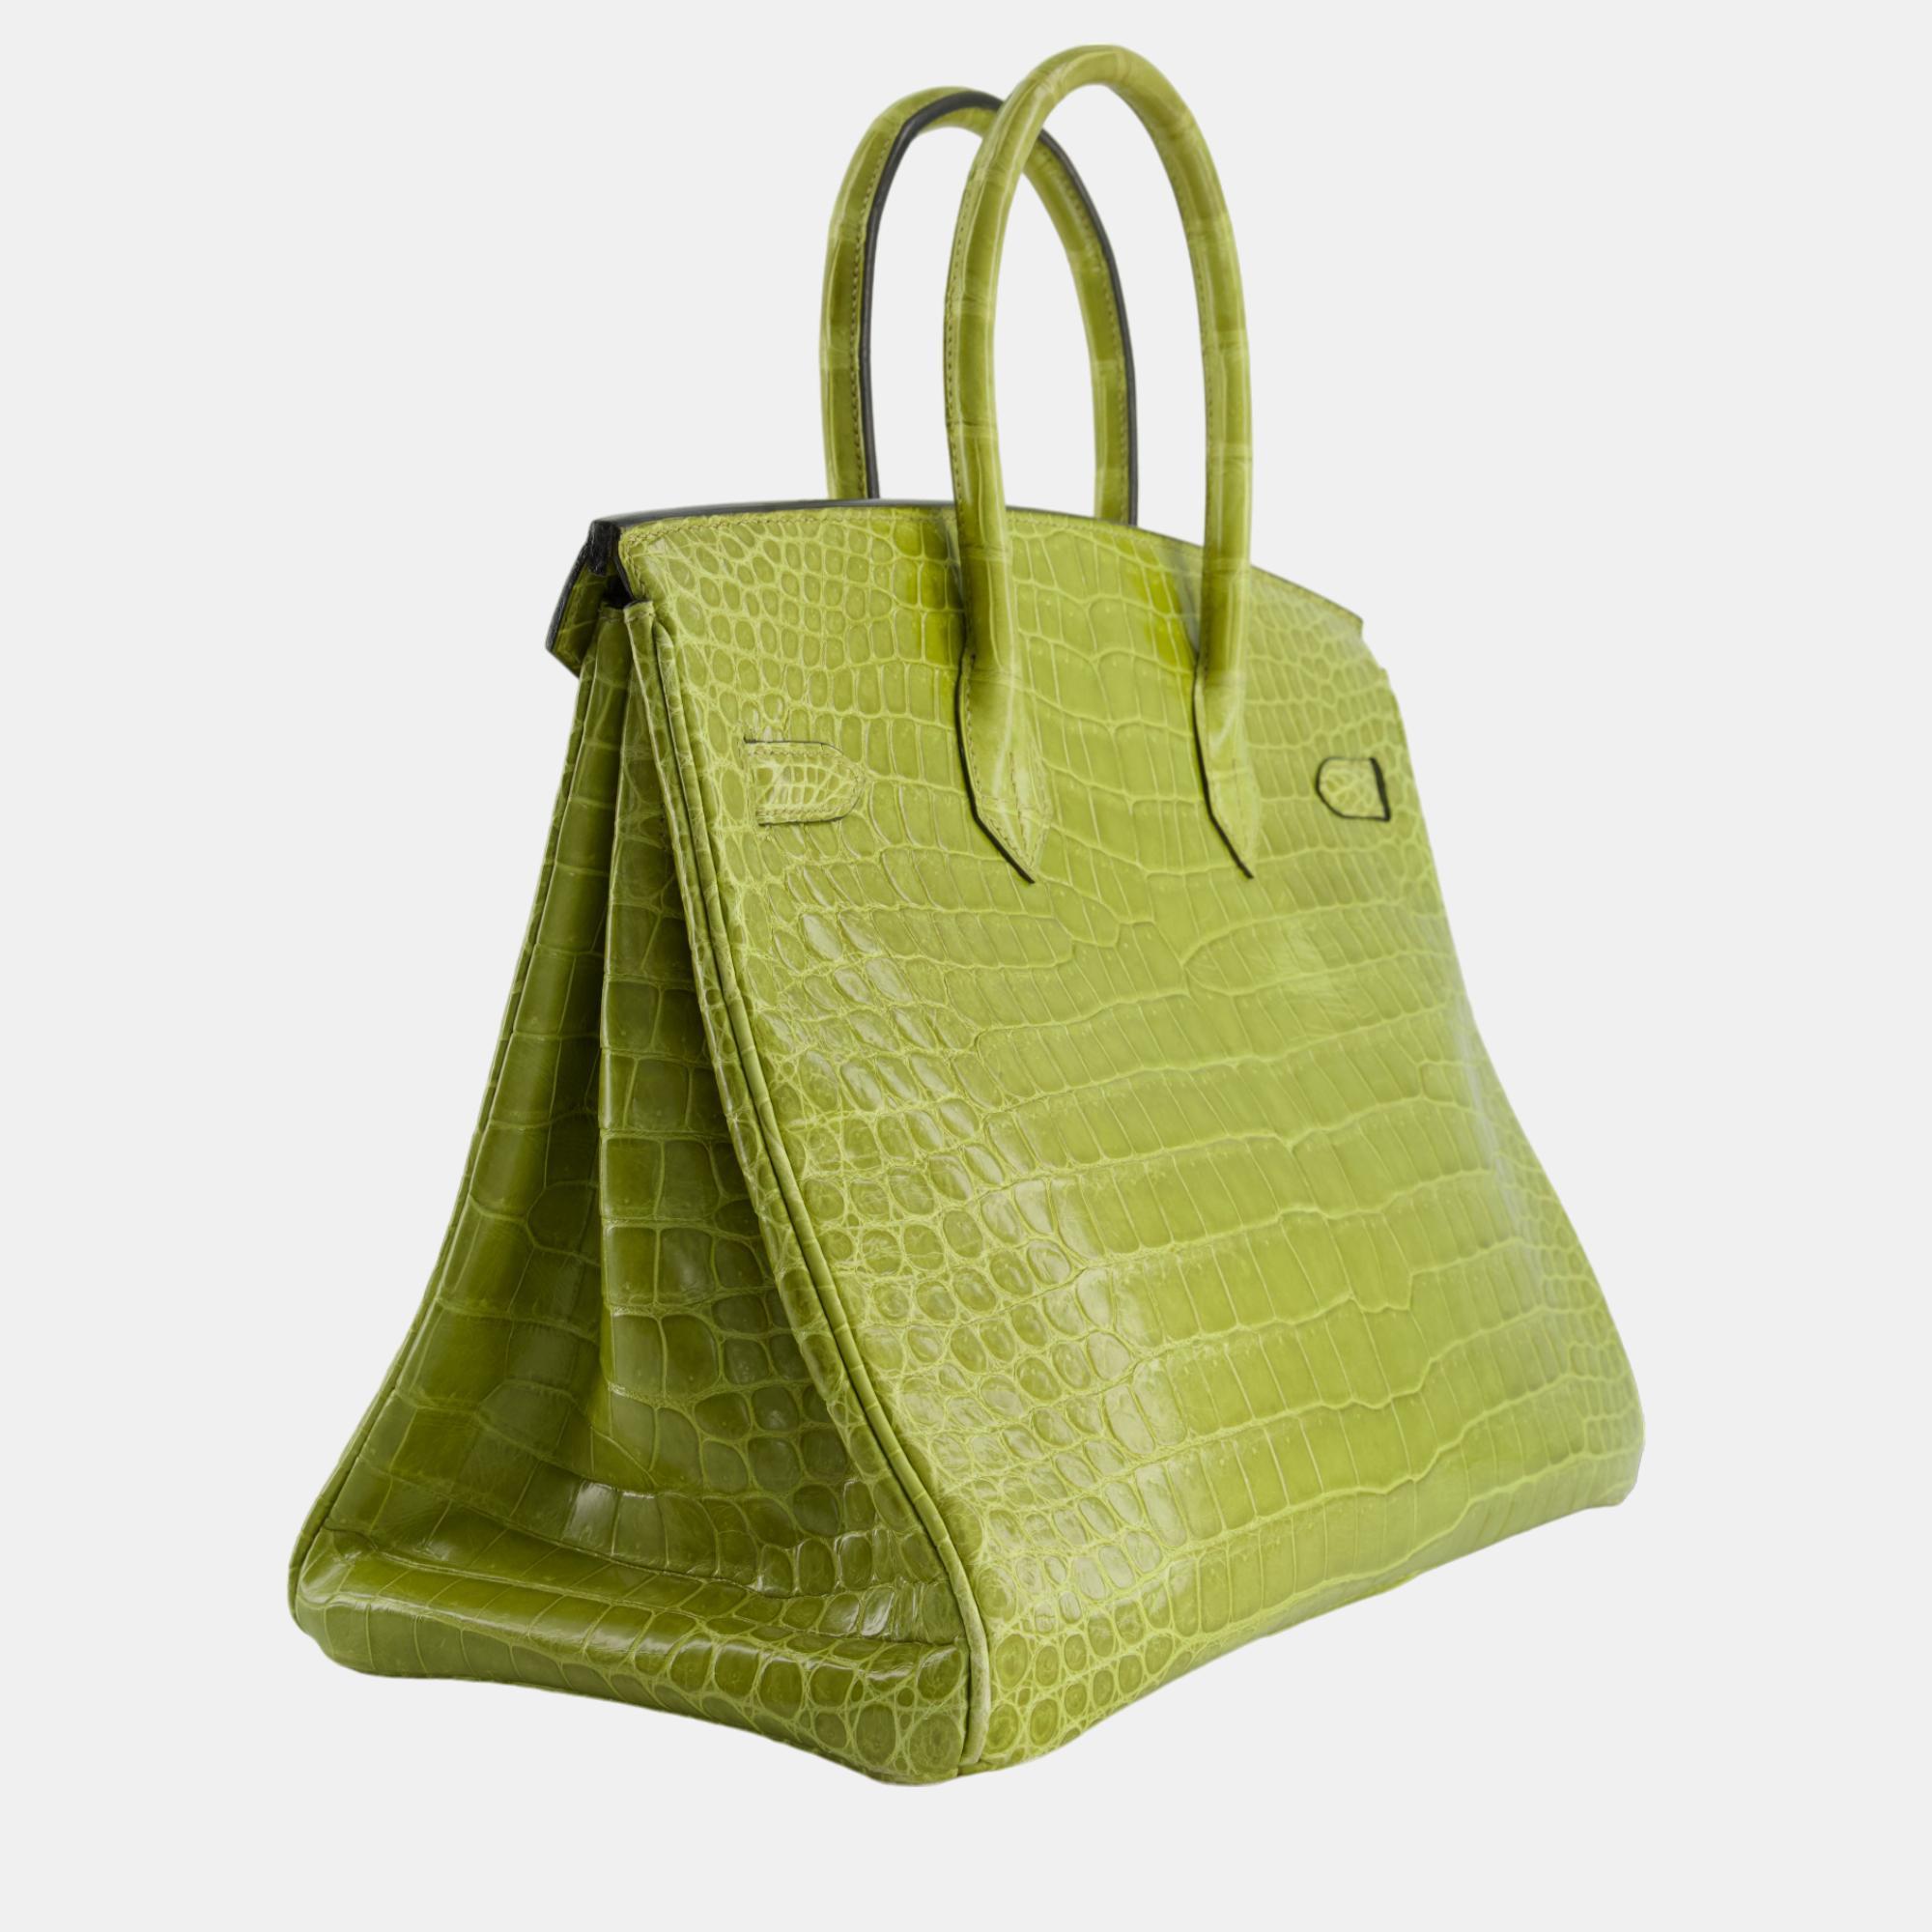 Hermes Birkin Bag 35cm In Crocodile Shiny Porosus Vert Anis Colour With Palladium Hardware